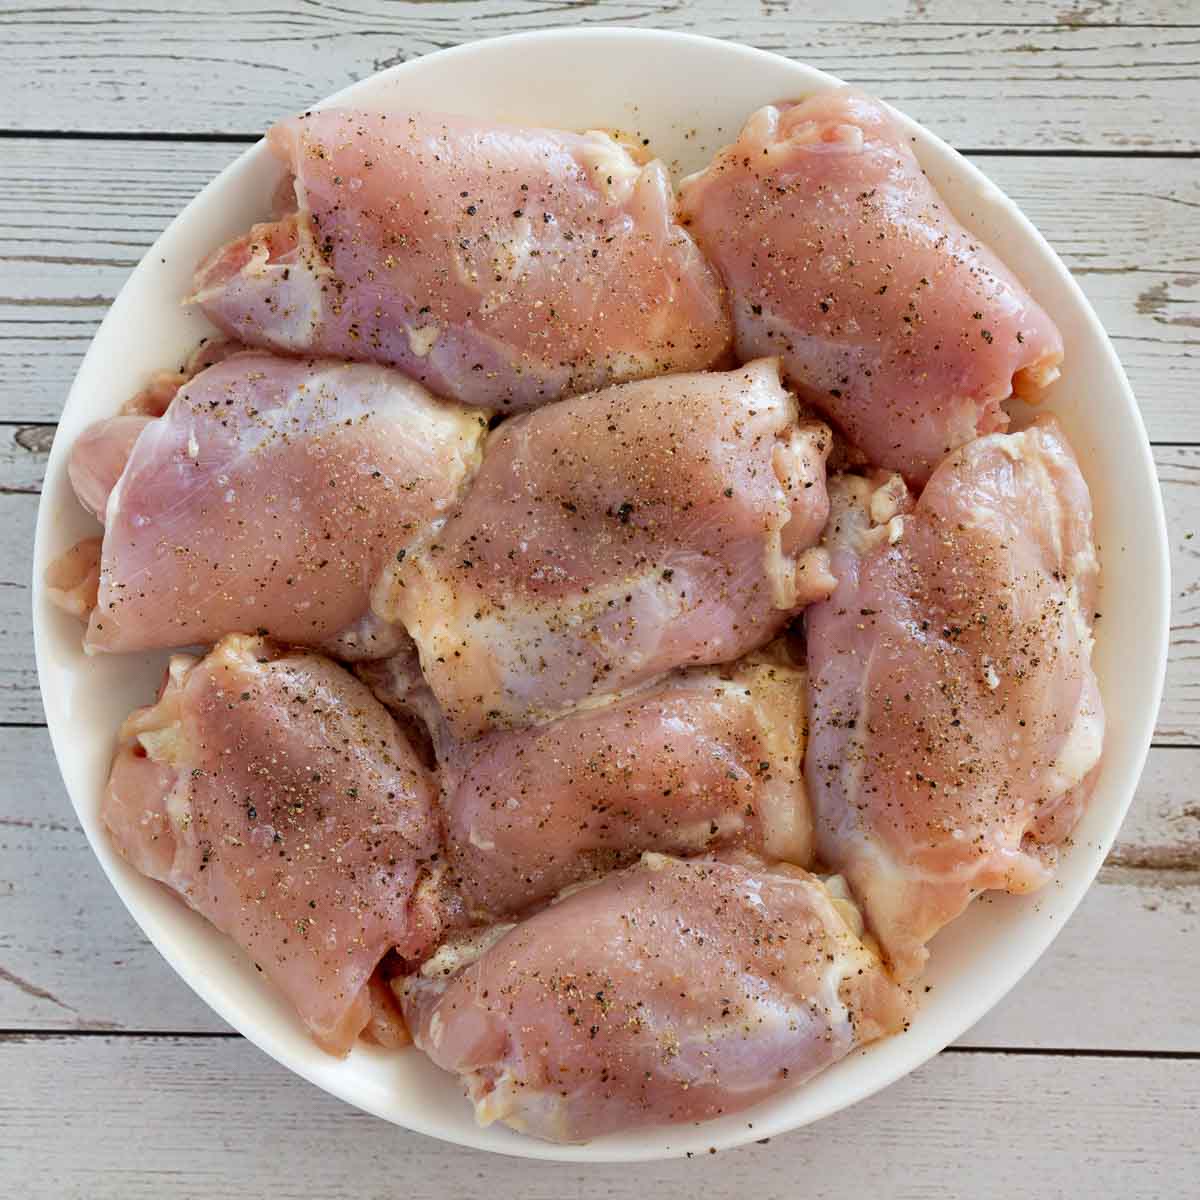 Plate of skinless boneless chicken thighs